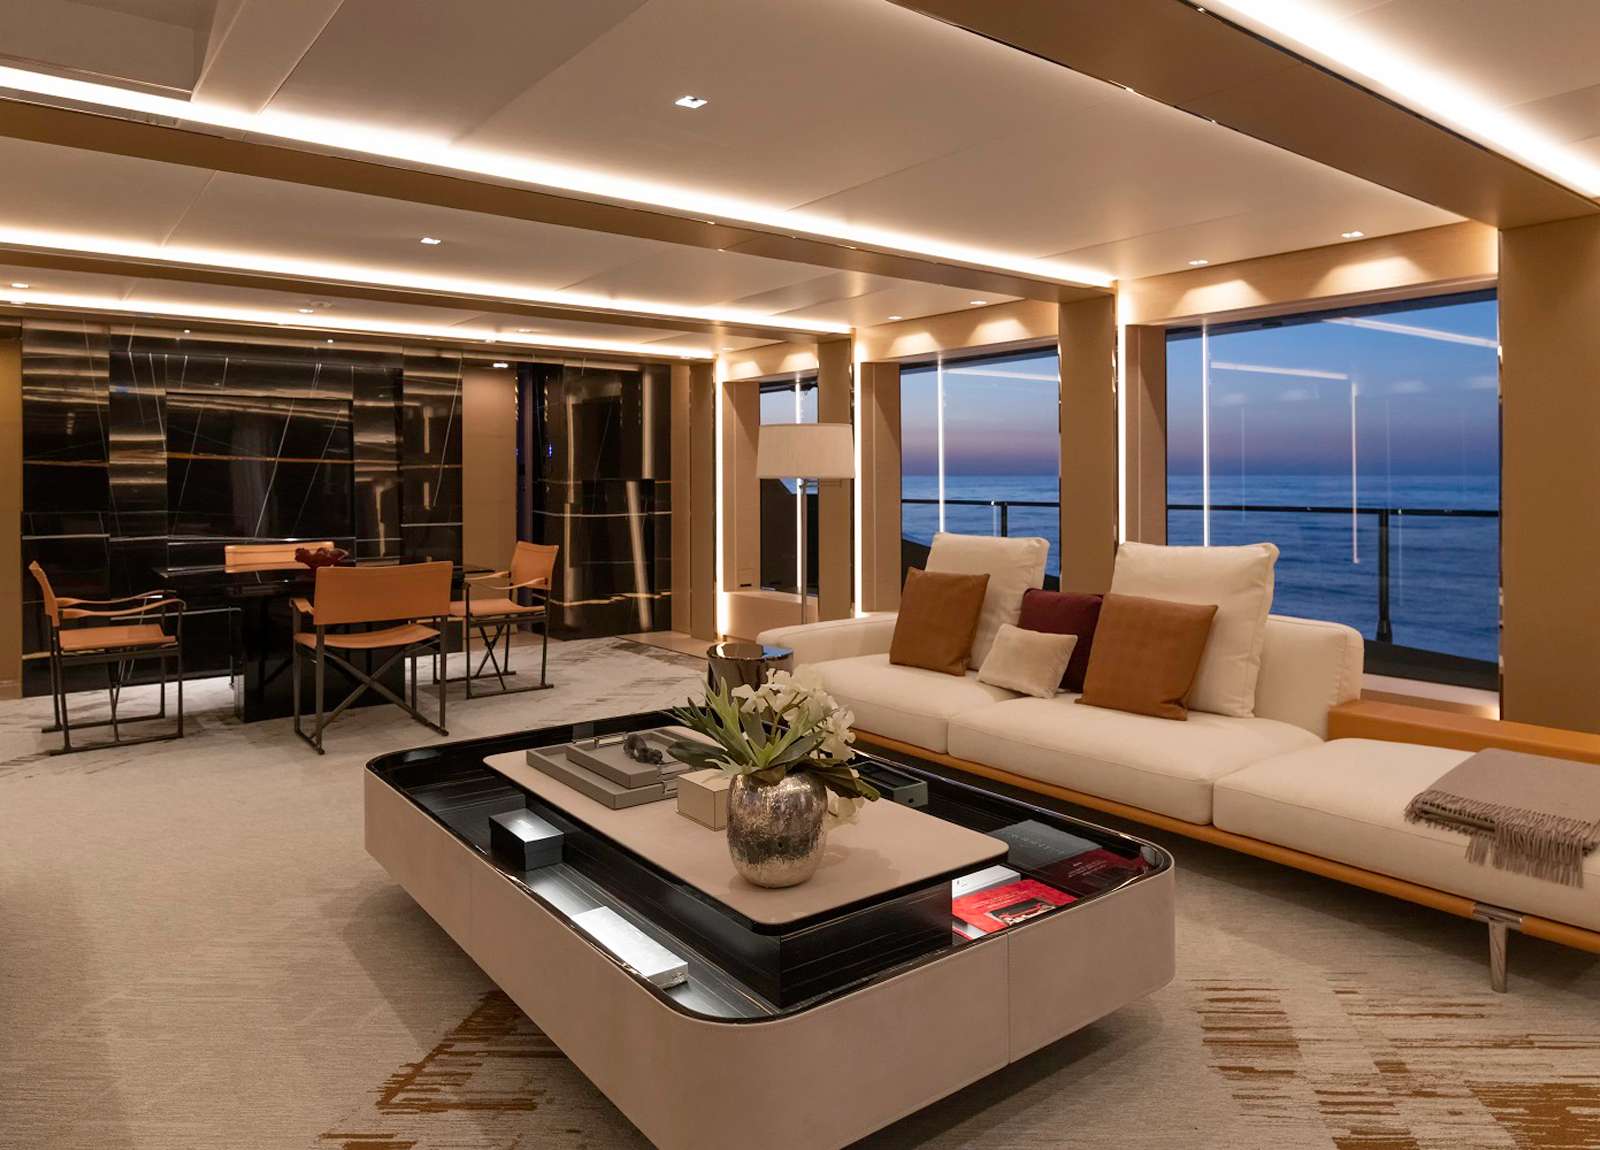 lounge luxusyacht rossinavi 50m lel charter